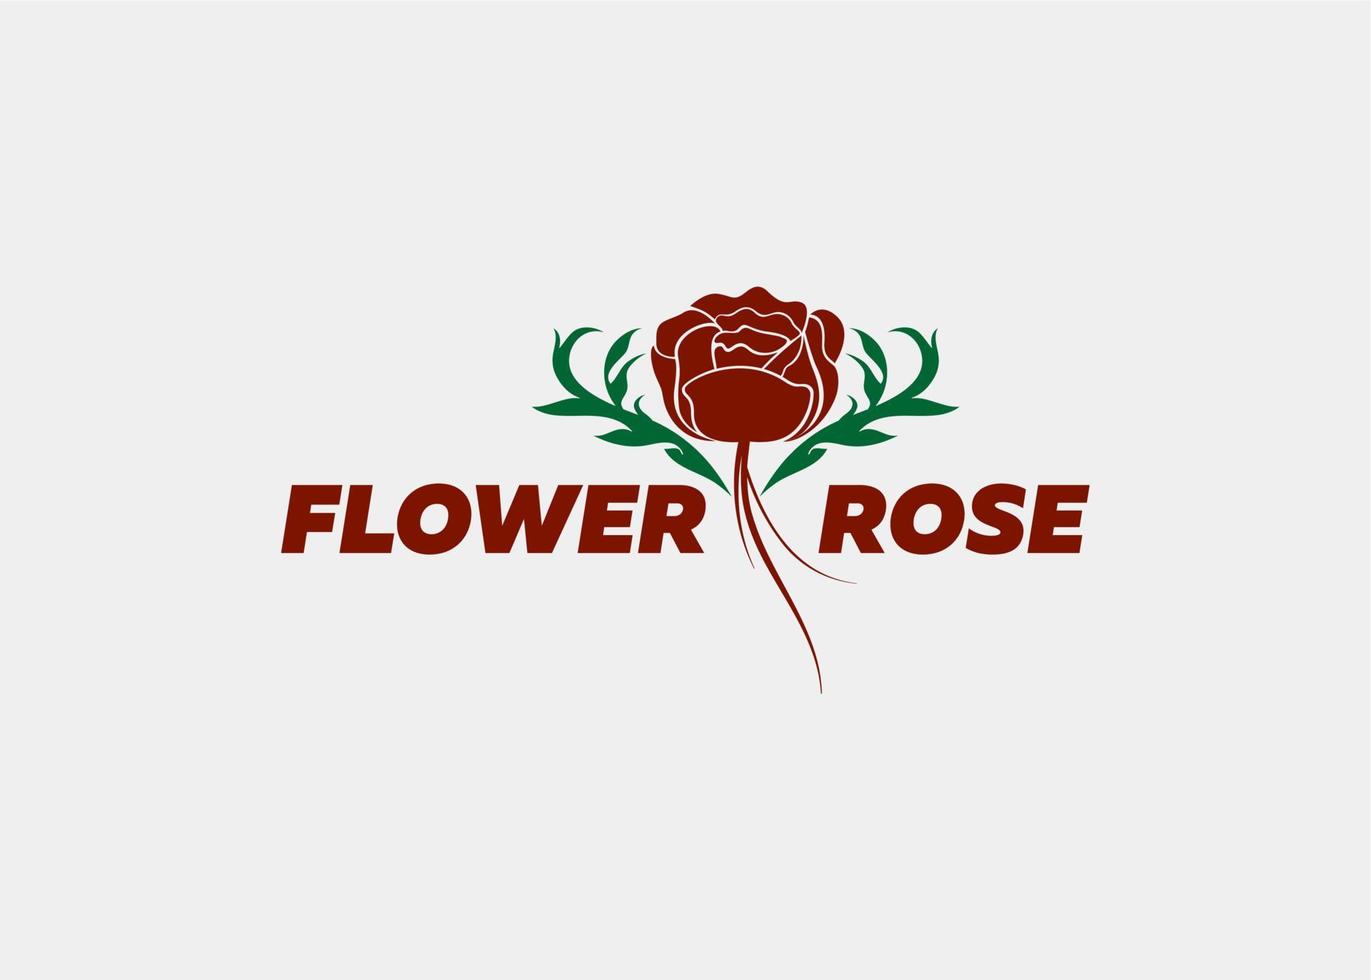 LOGO FLOWER ROSE COMPANY NAME vector